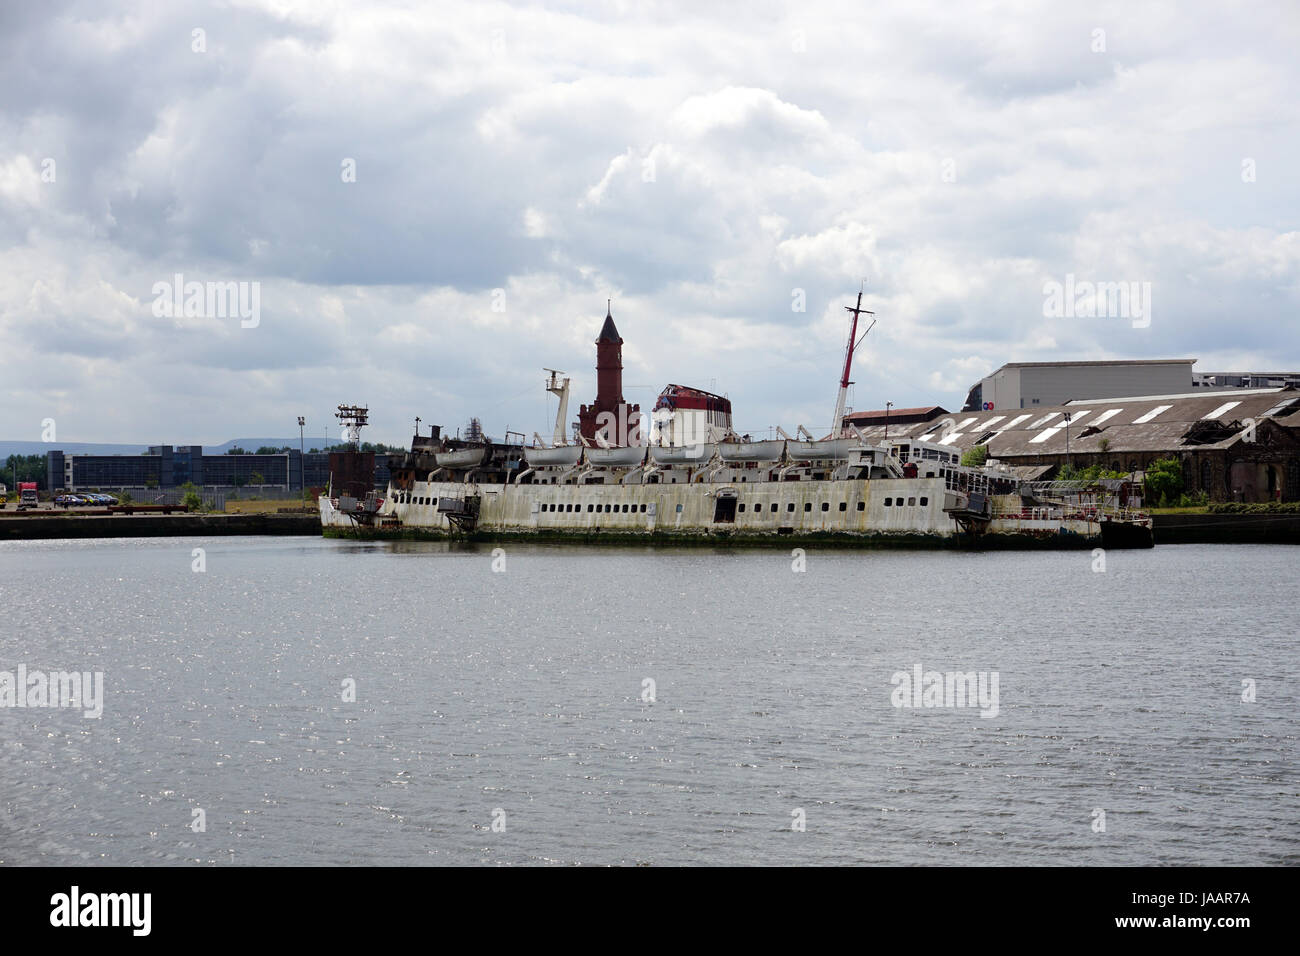 Tuxedo Royal abandoned derelict pleasure cruiser boat now a shipwreck ...